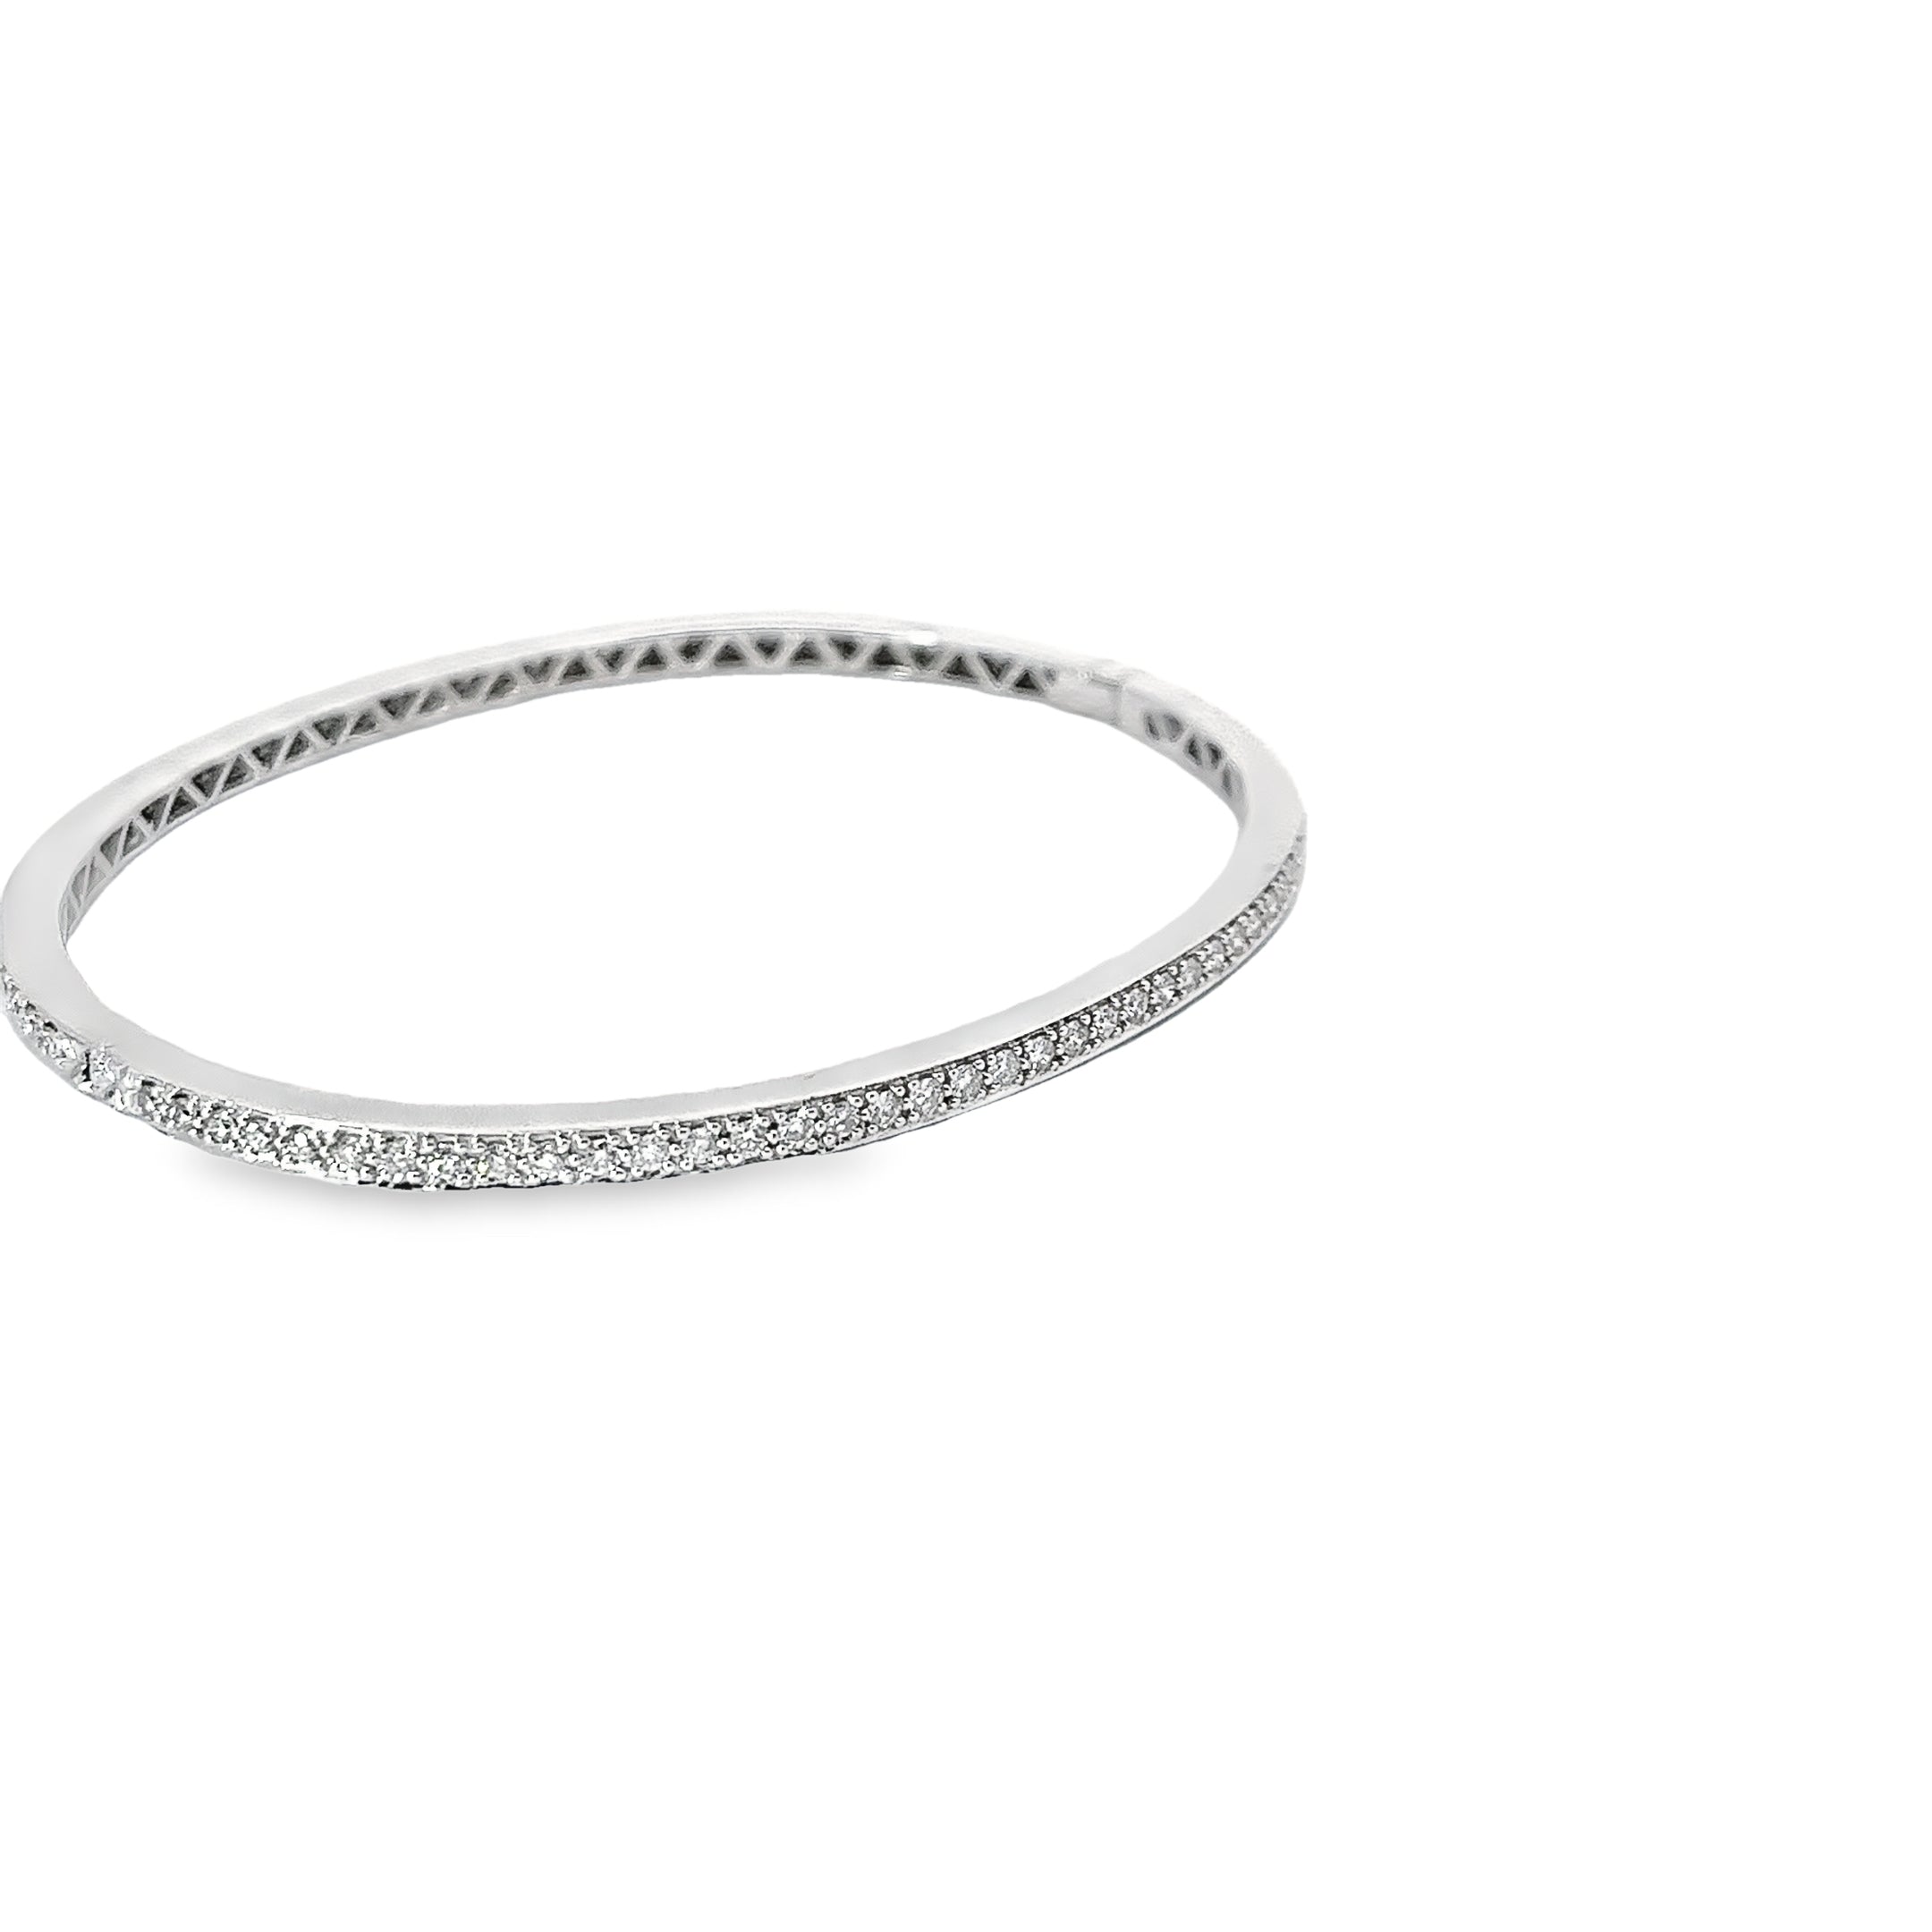 Ladies 18k white Gold Diamond Bangle Bracelet